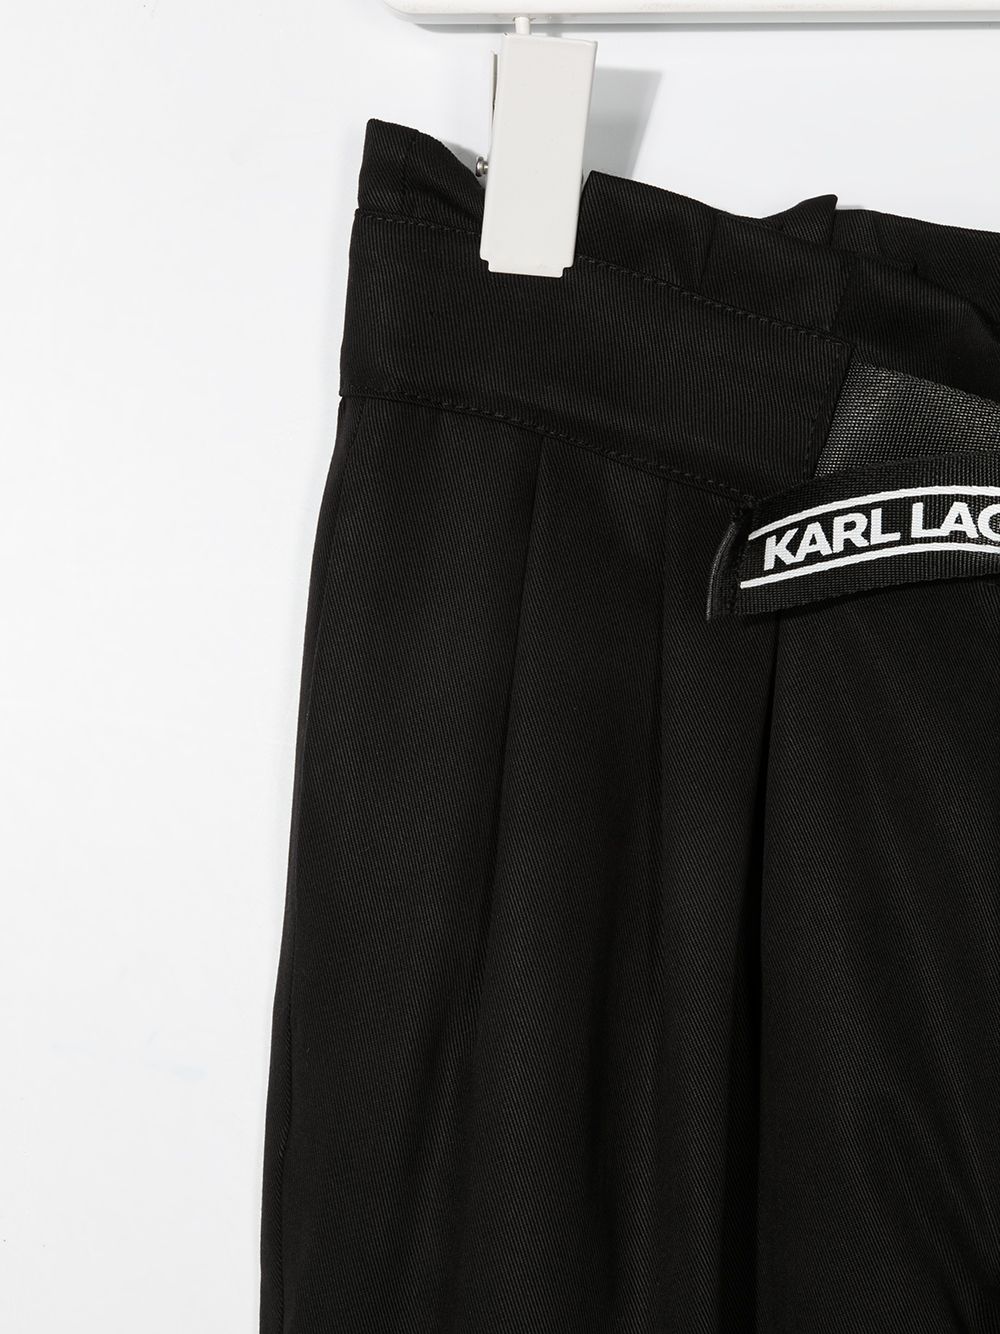 фото Karl lagerfeld kids брюки с завышенной талией и складками